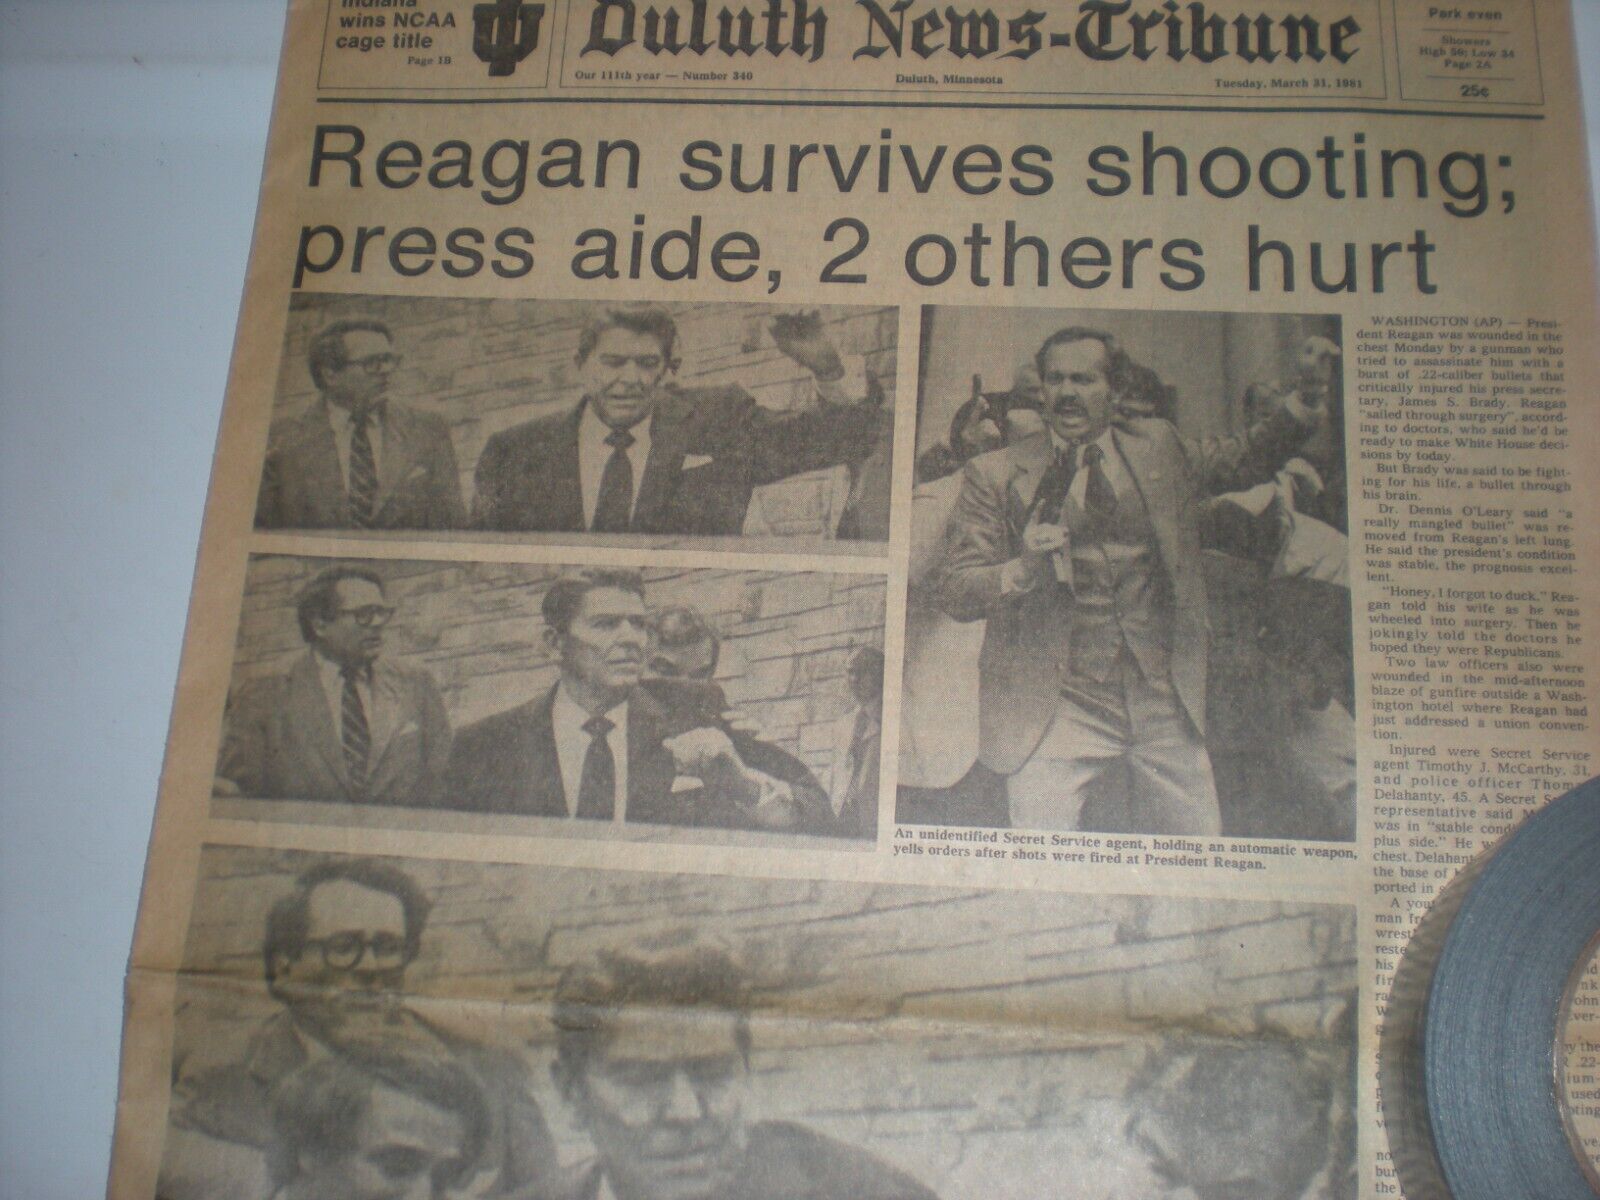 President Ronald Reagan Shot by John Hinkley,  Tuesday March 31, 1981